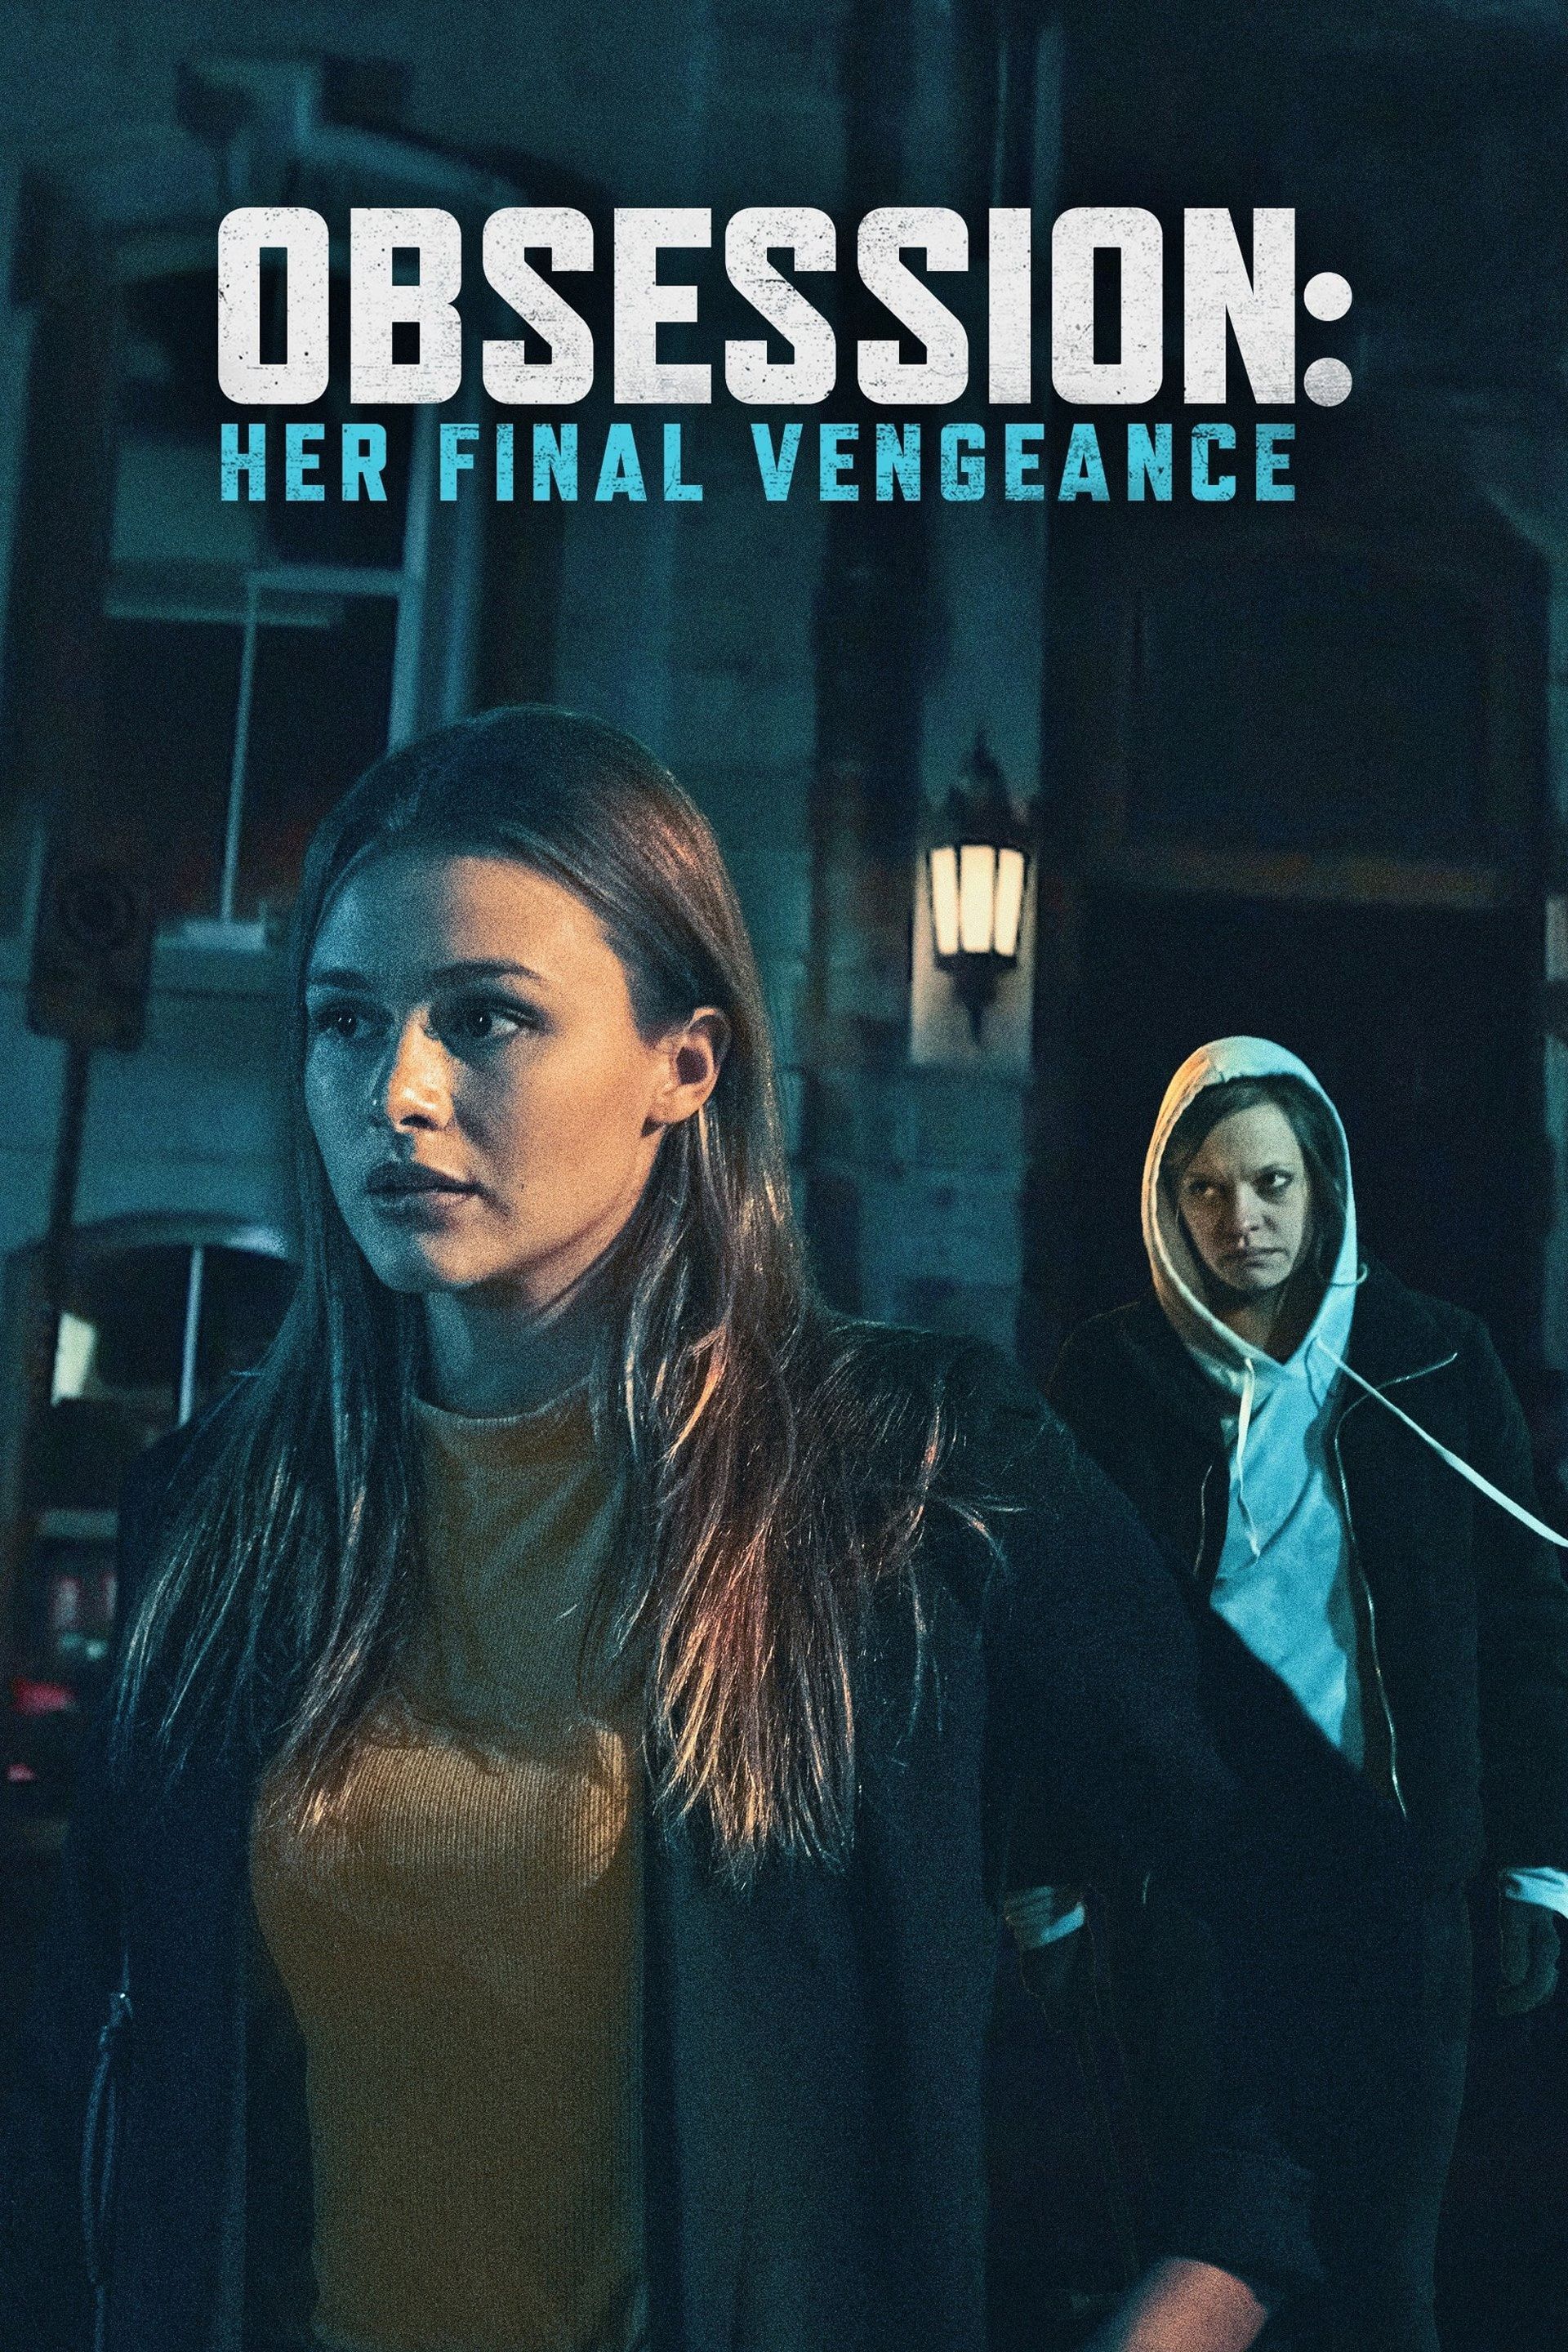 Vengeance (2022) - Filmaffinity